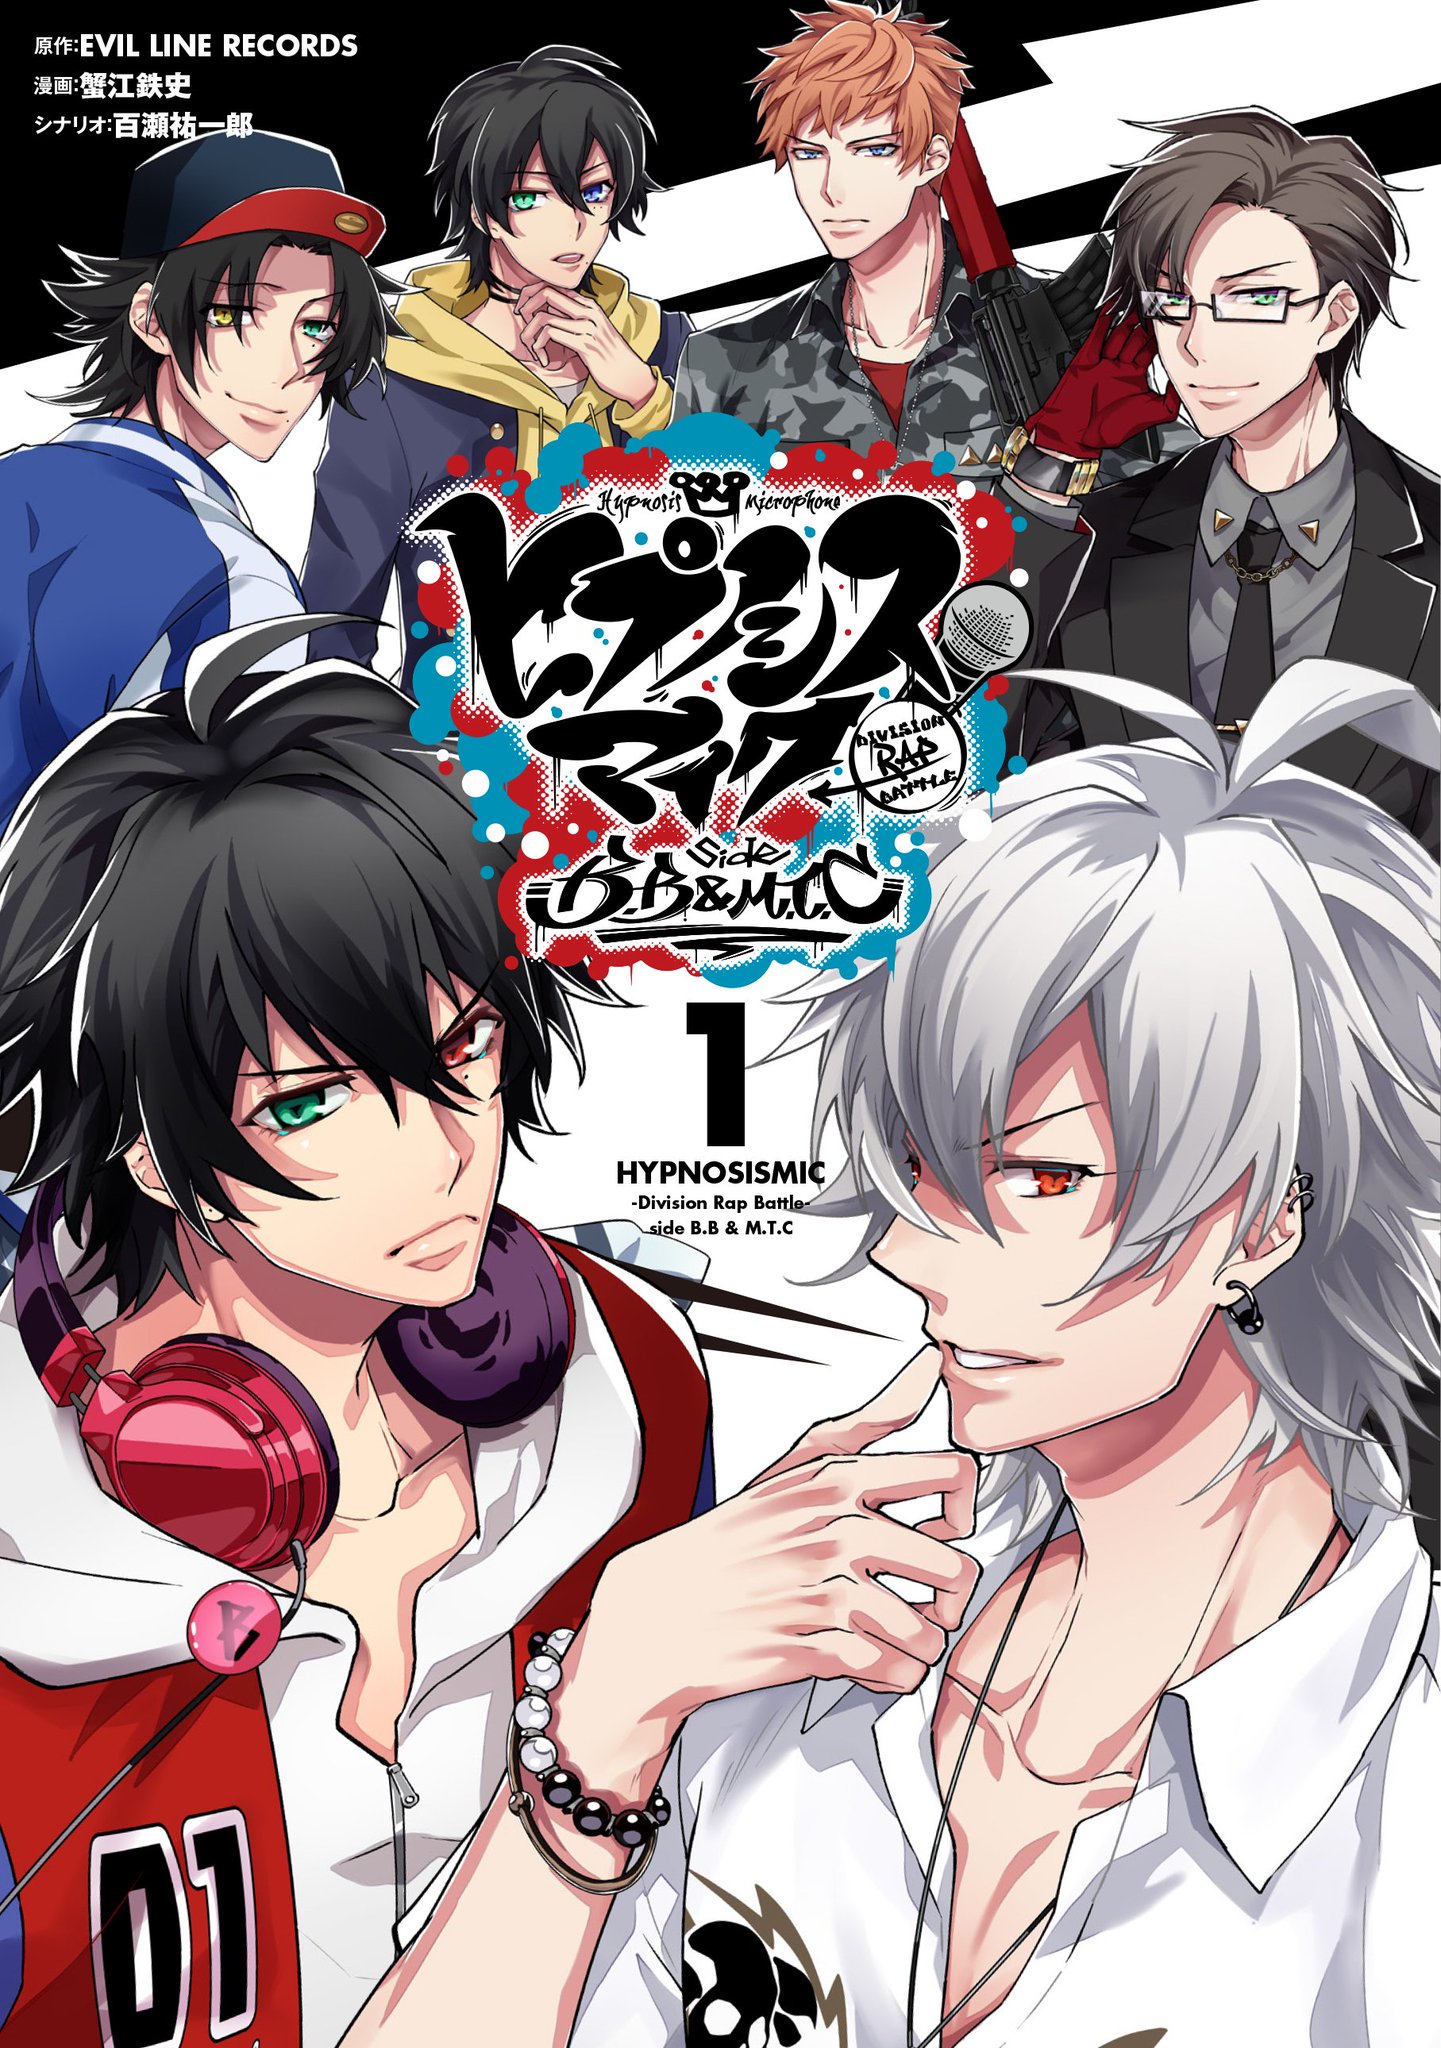 Hypnosis Mic Division Rap Battle Side Bb And Mtc Manga Manga Sanctuary 3155